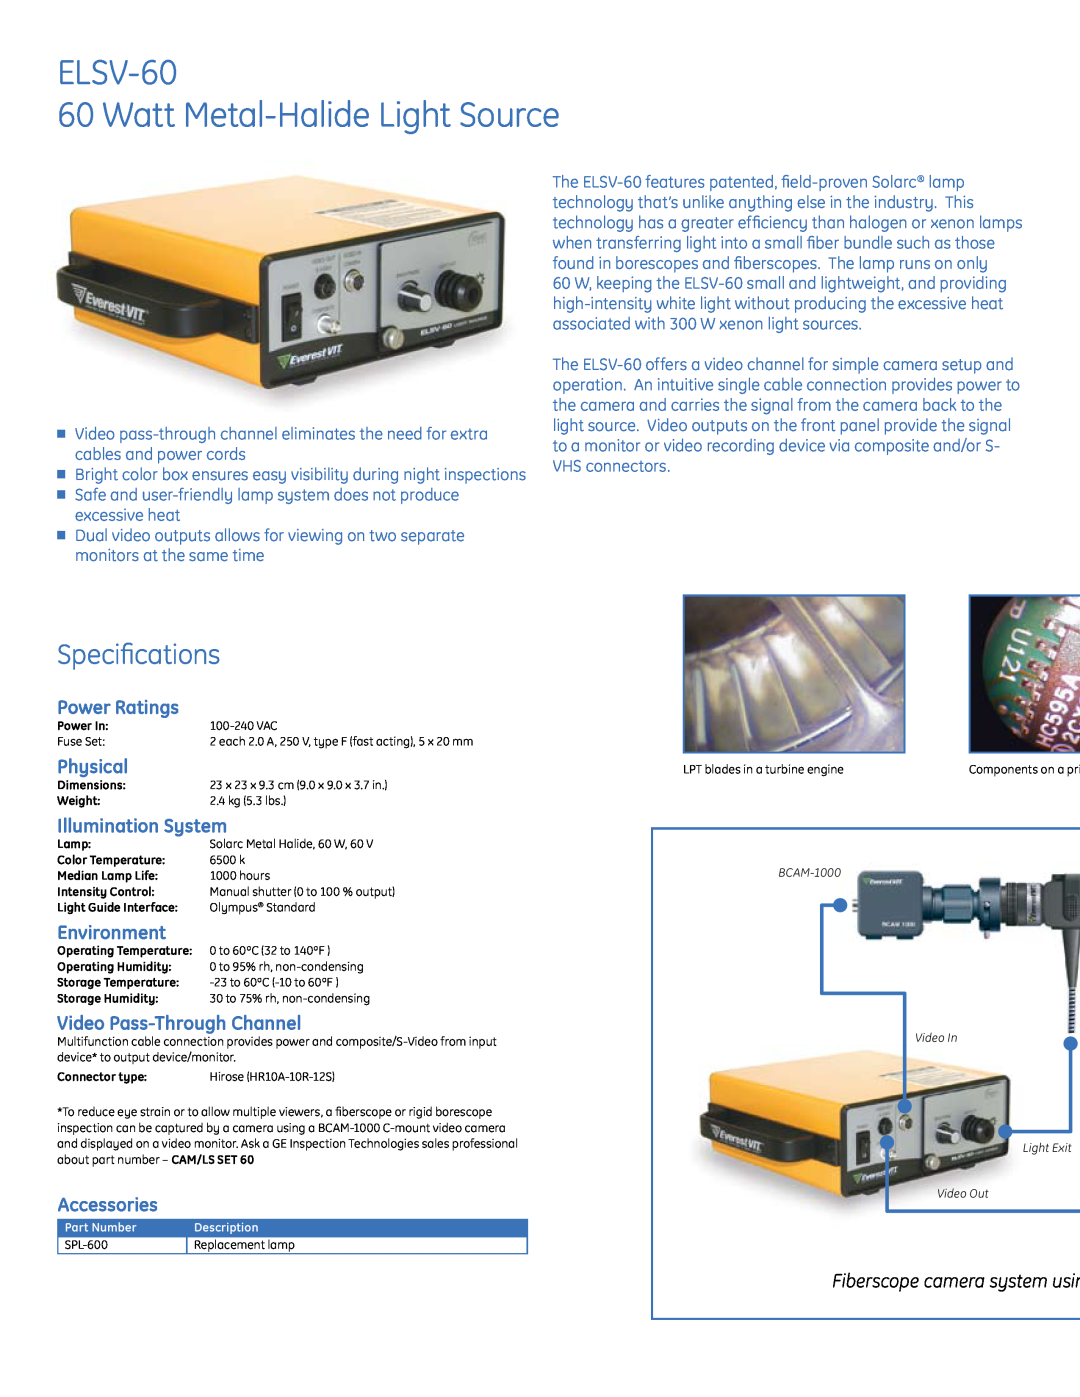 GE ELSV-60 60 Watt Metal-Halide Light Source, Specifications, Power Ratings, Physical, Illumination System, Environment 